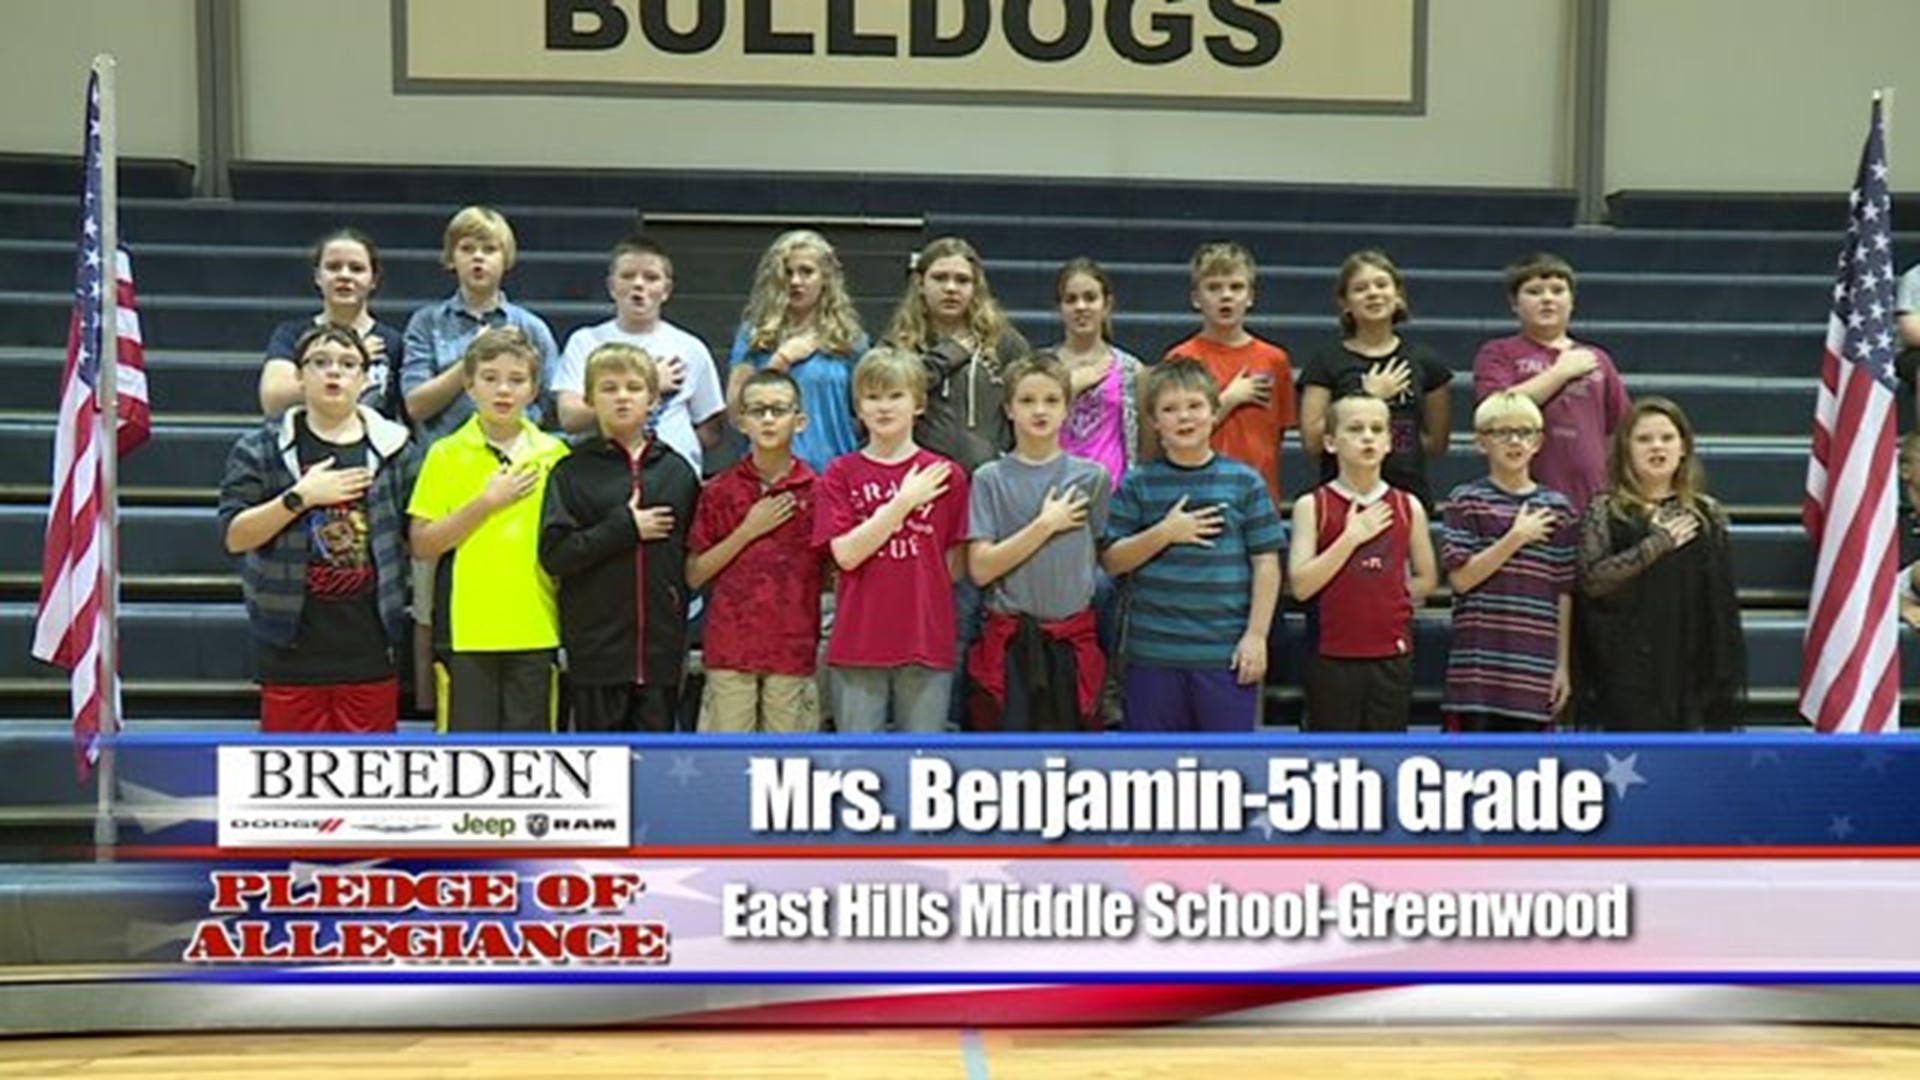 East Hills Middle School, Greenwood - Mrs. Benjamin - 5th Grade